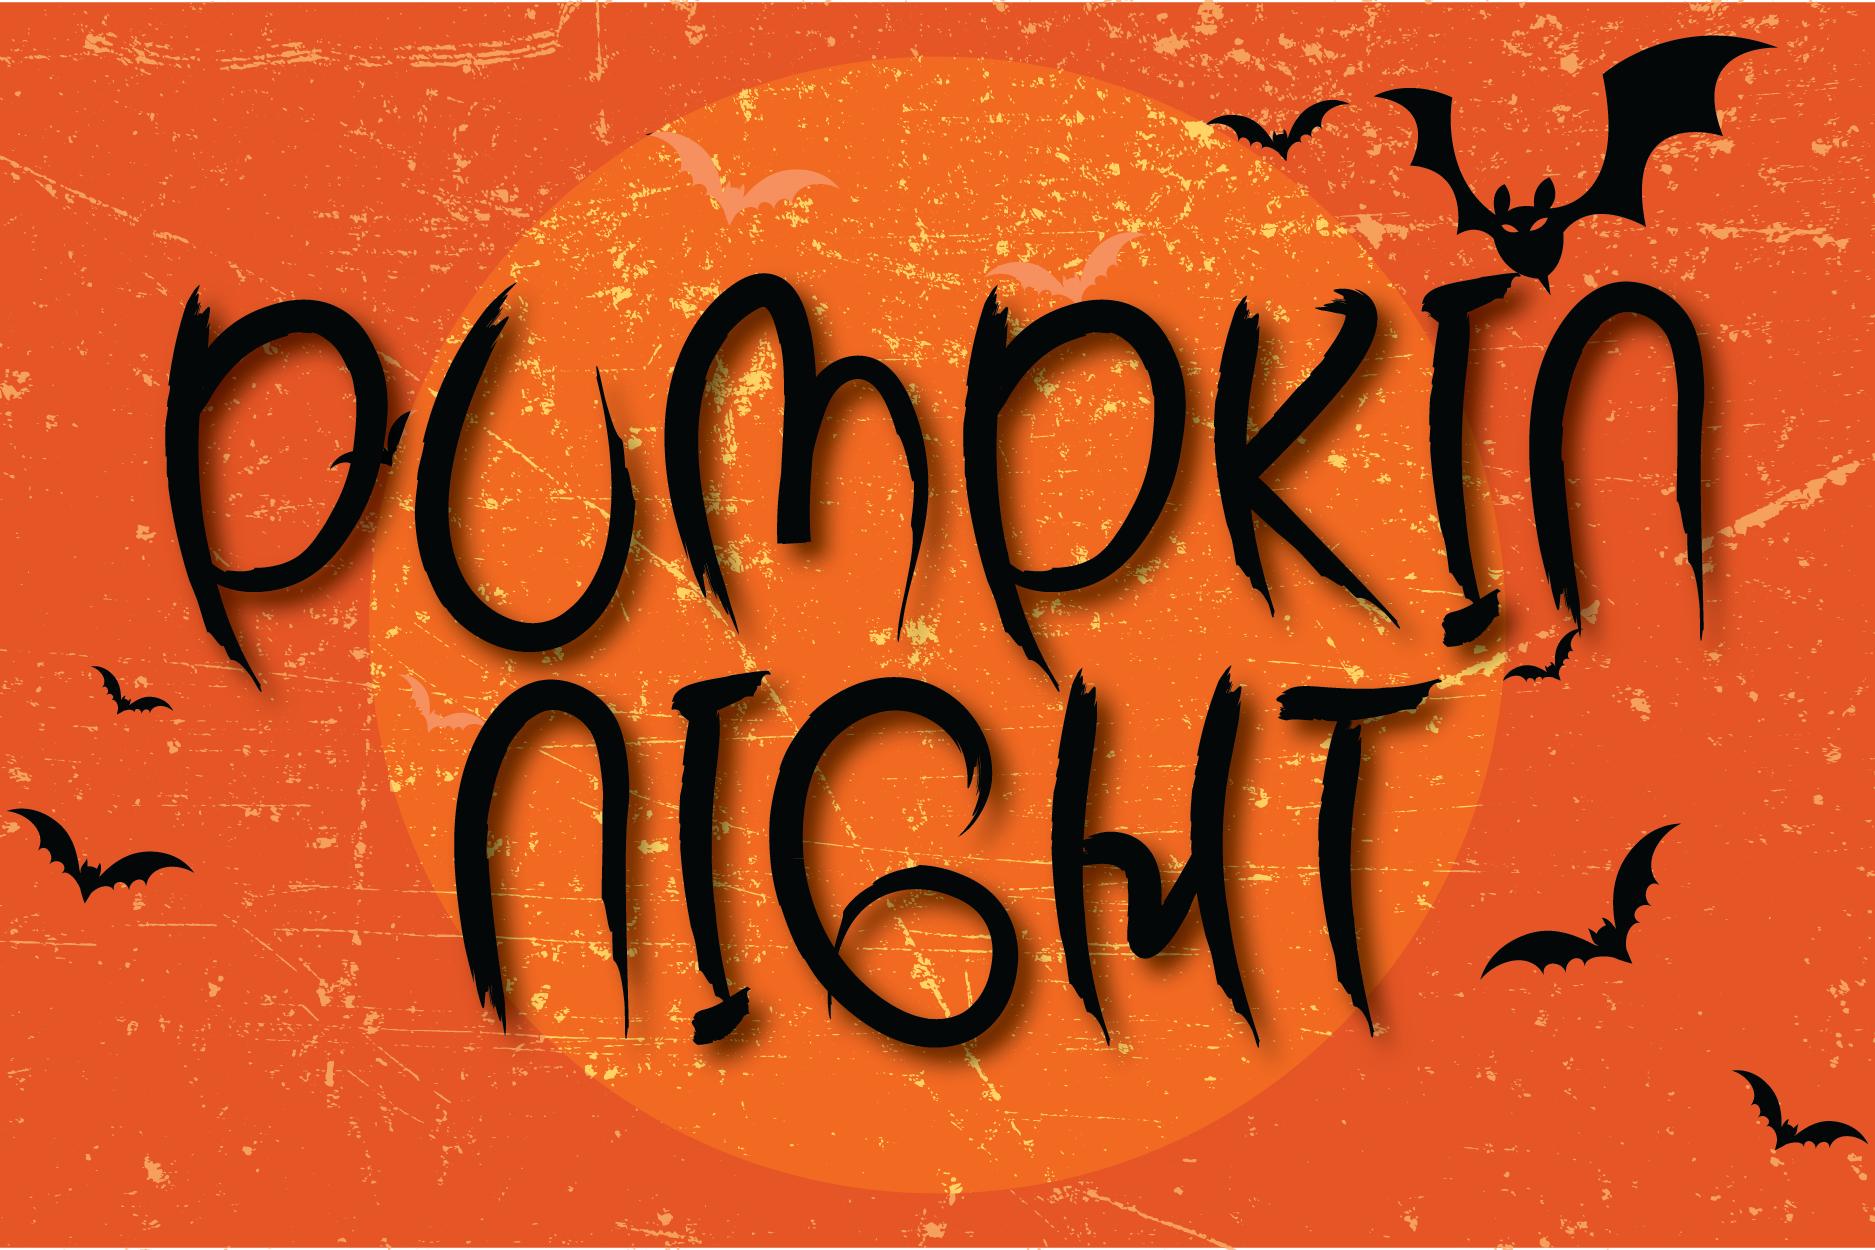 Pumpkin Night Font